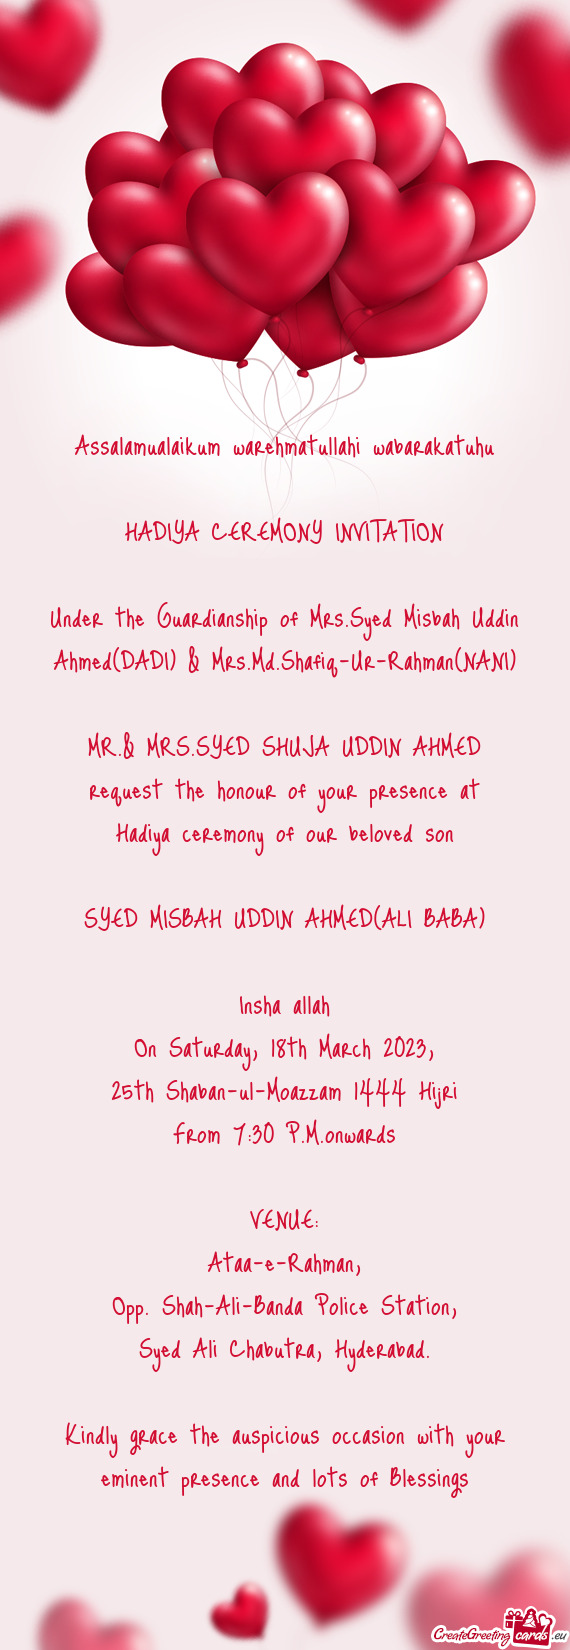 Under the Guardianship of Mrs.Syed Misbah Uddin Ahmed(DADI) & Mrs.Md.Shafiq-Ur-Rahman(NANI)